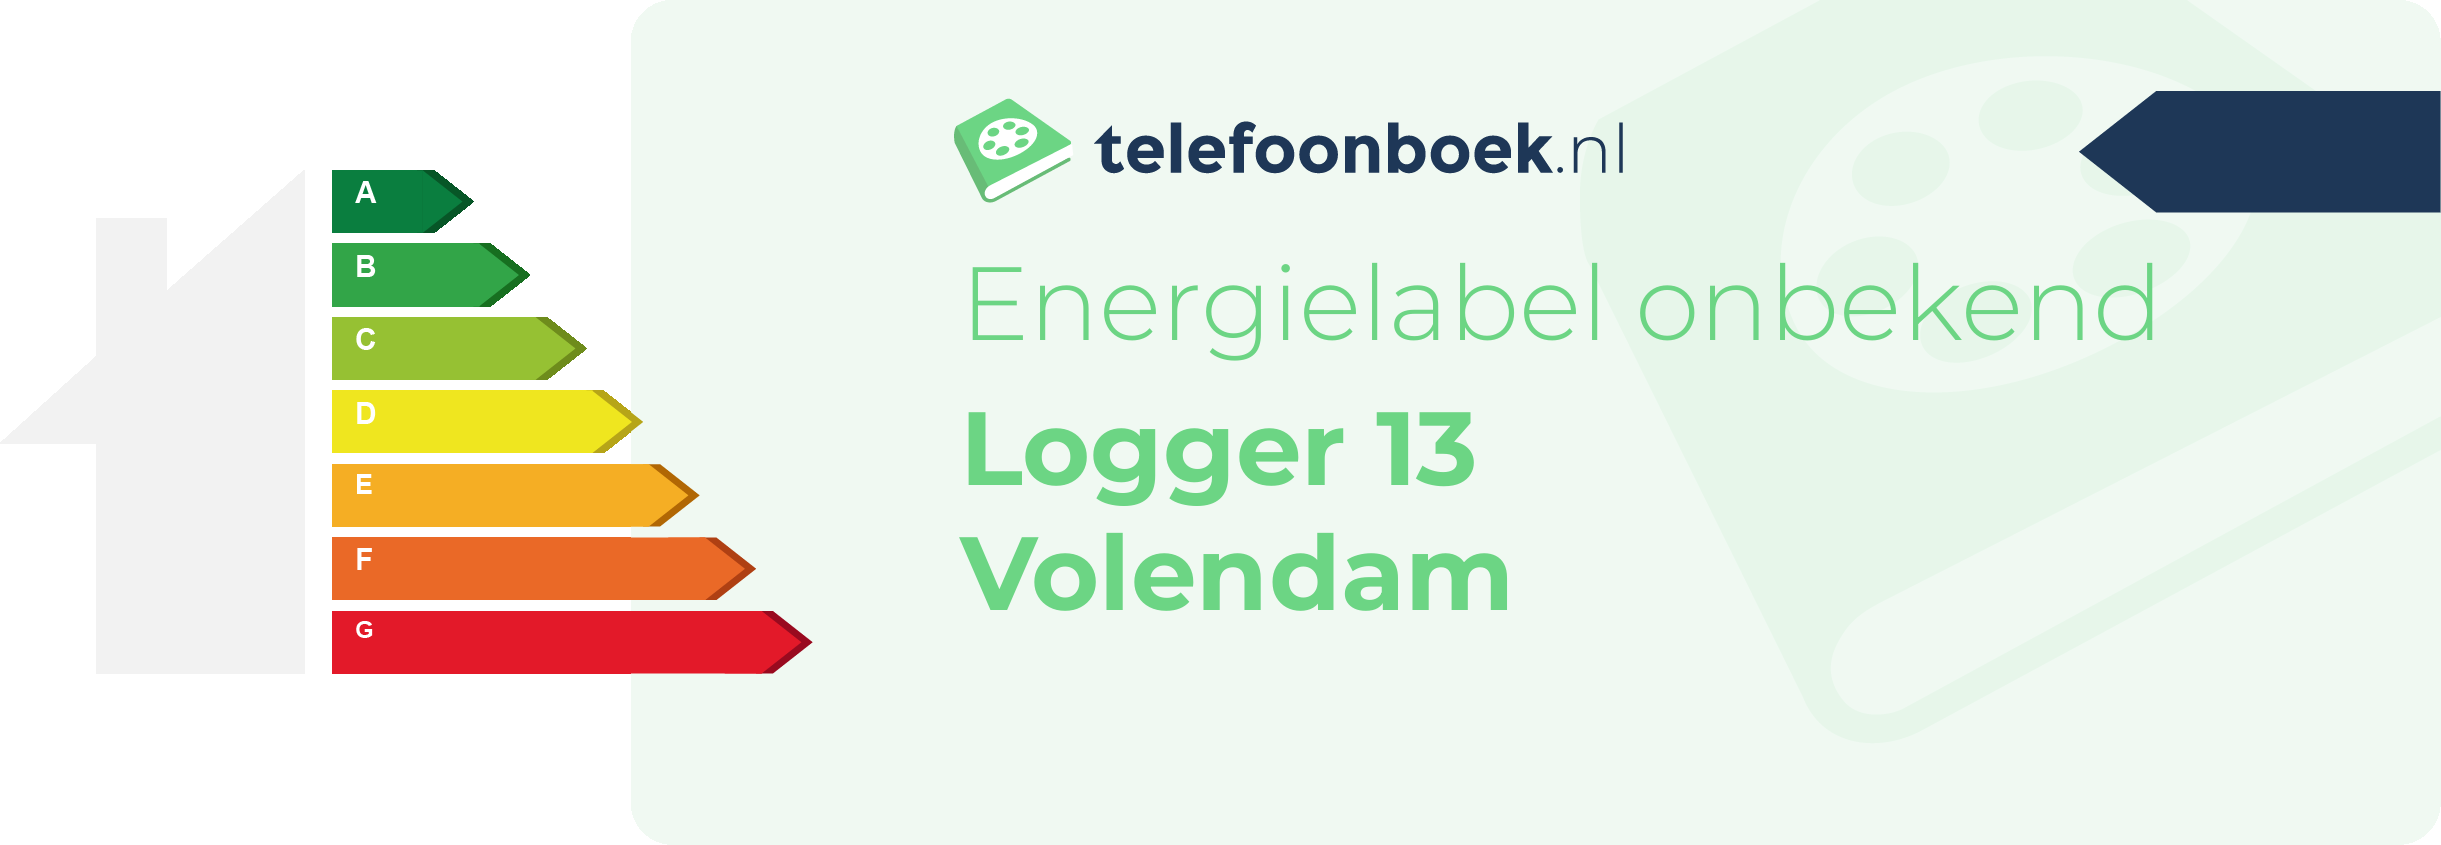 Energielabel Logger 13 Volendam